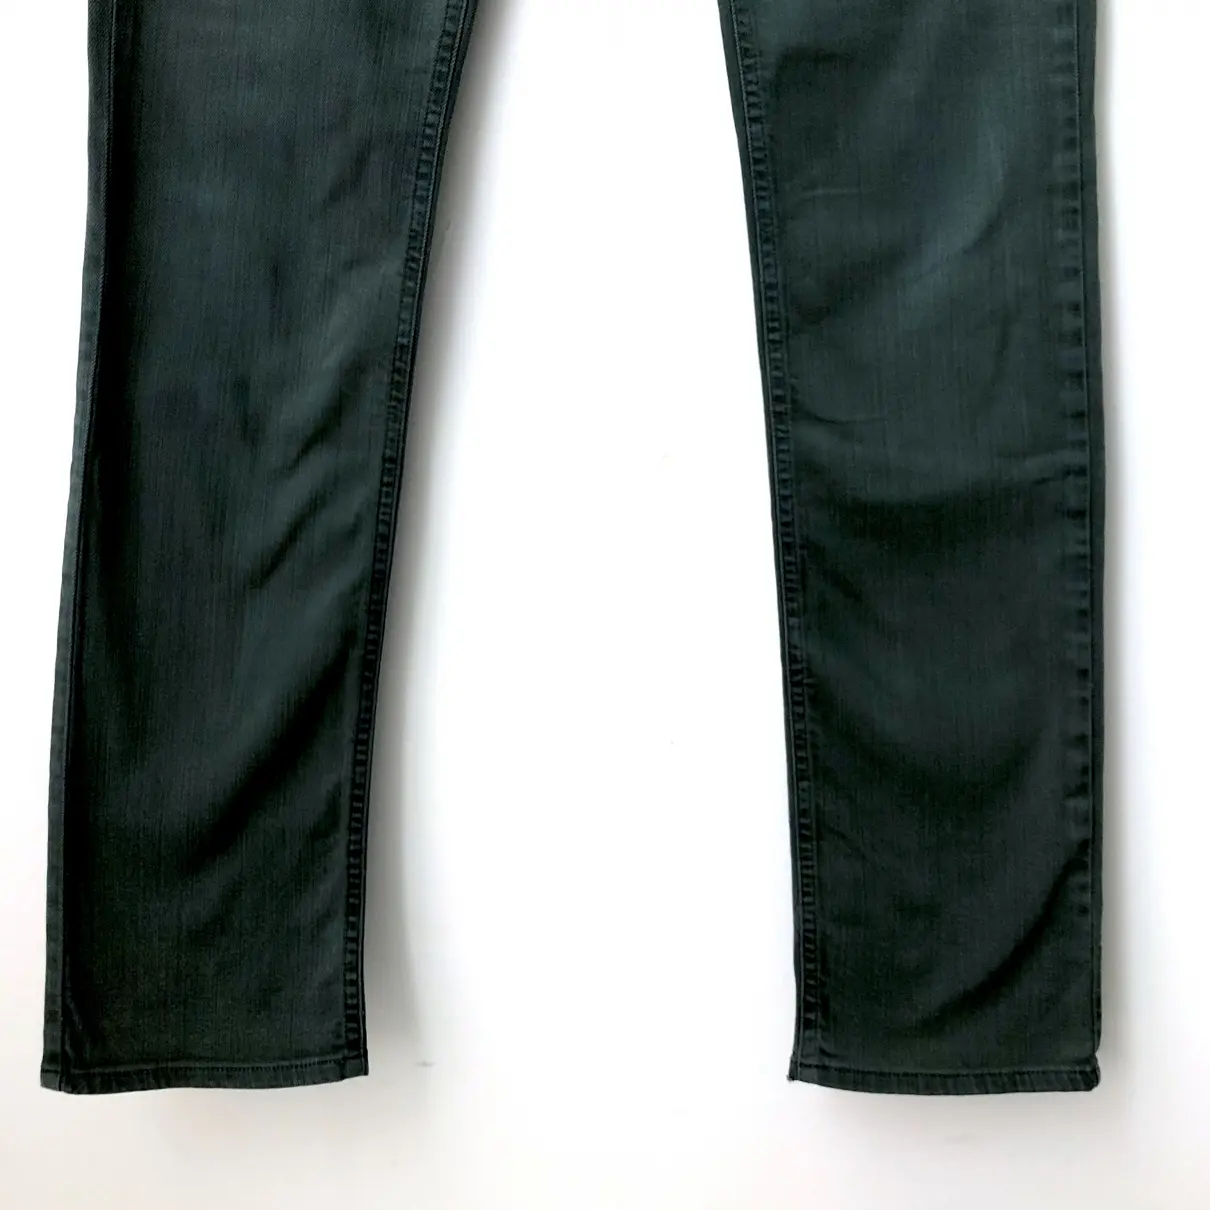 Straight pants Maison Martin Margiela - Vintage